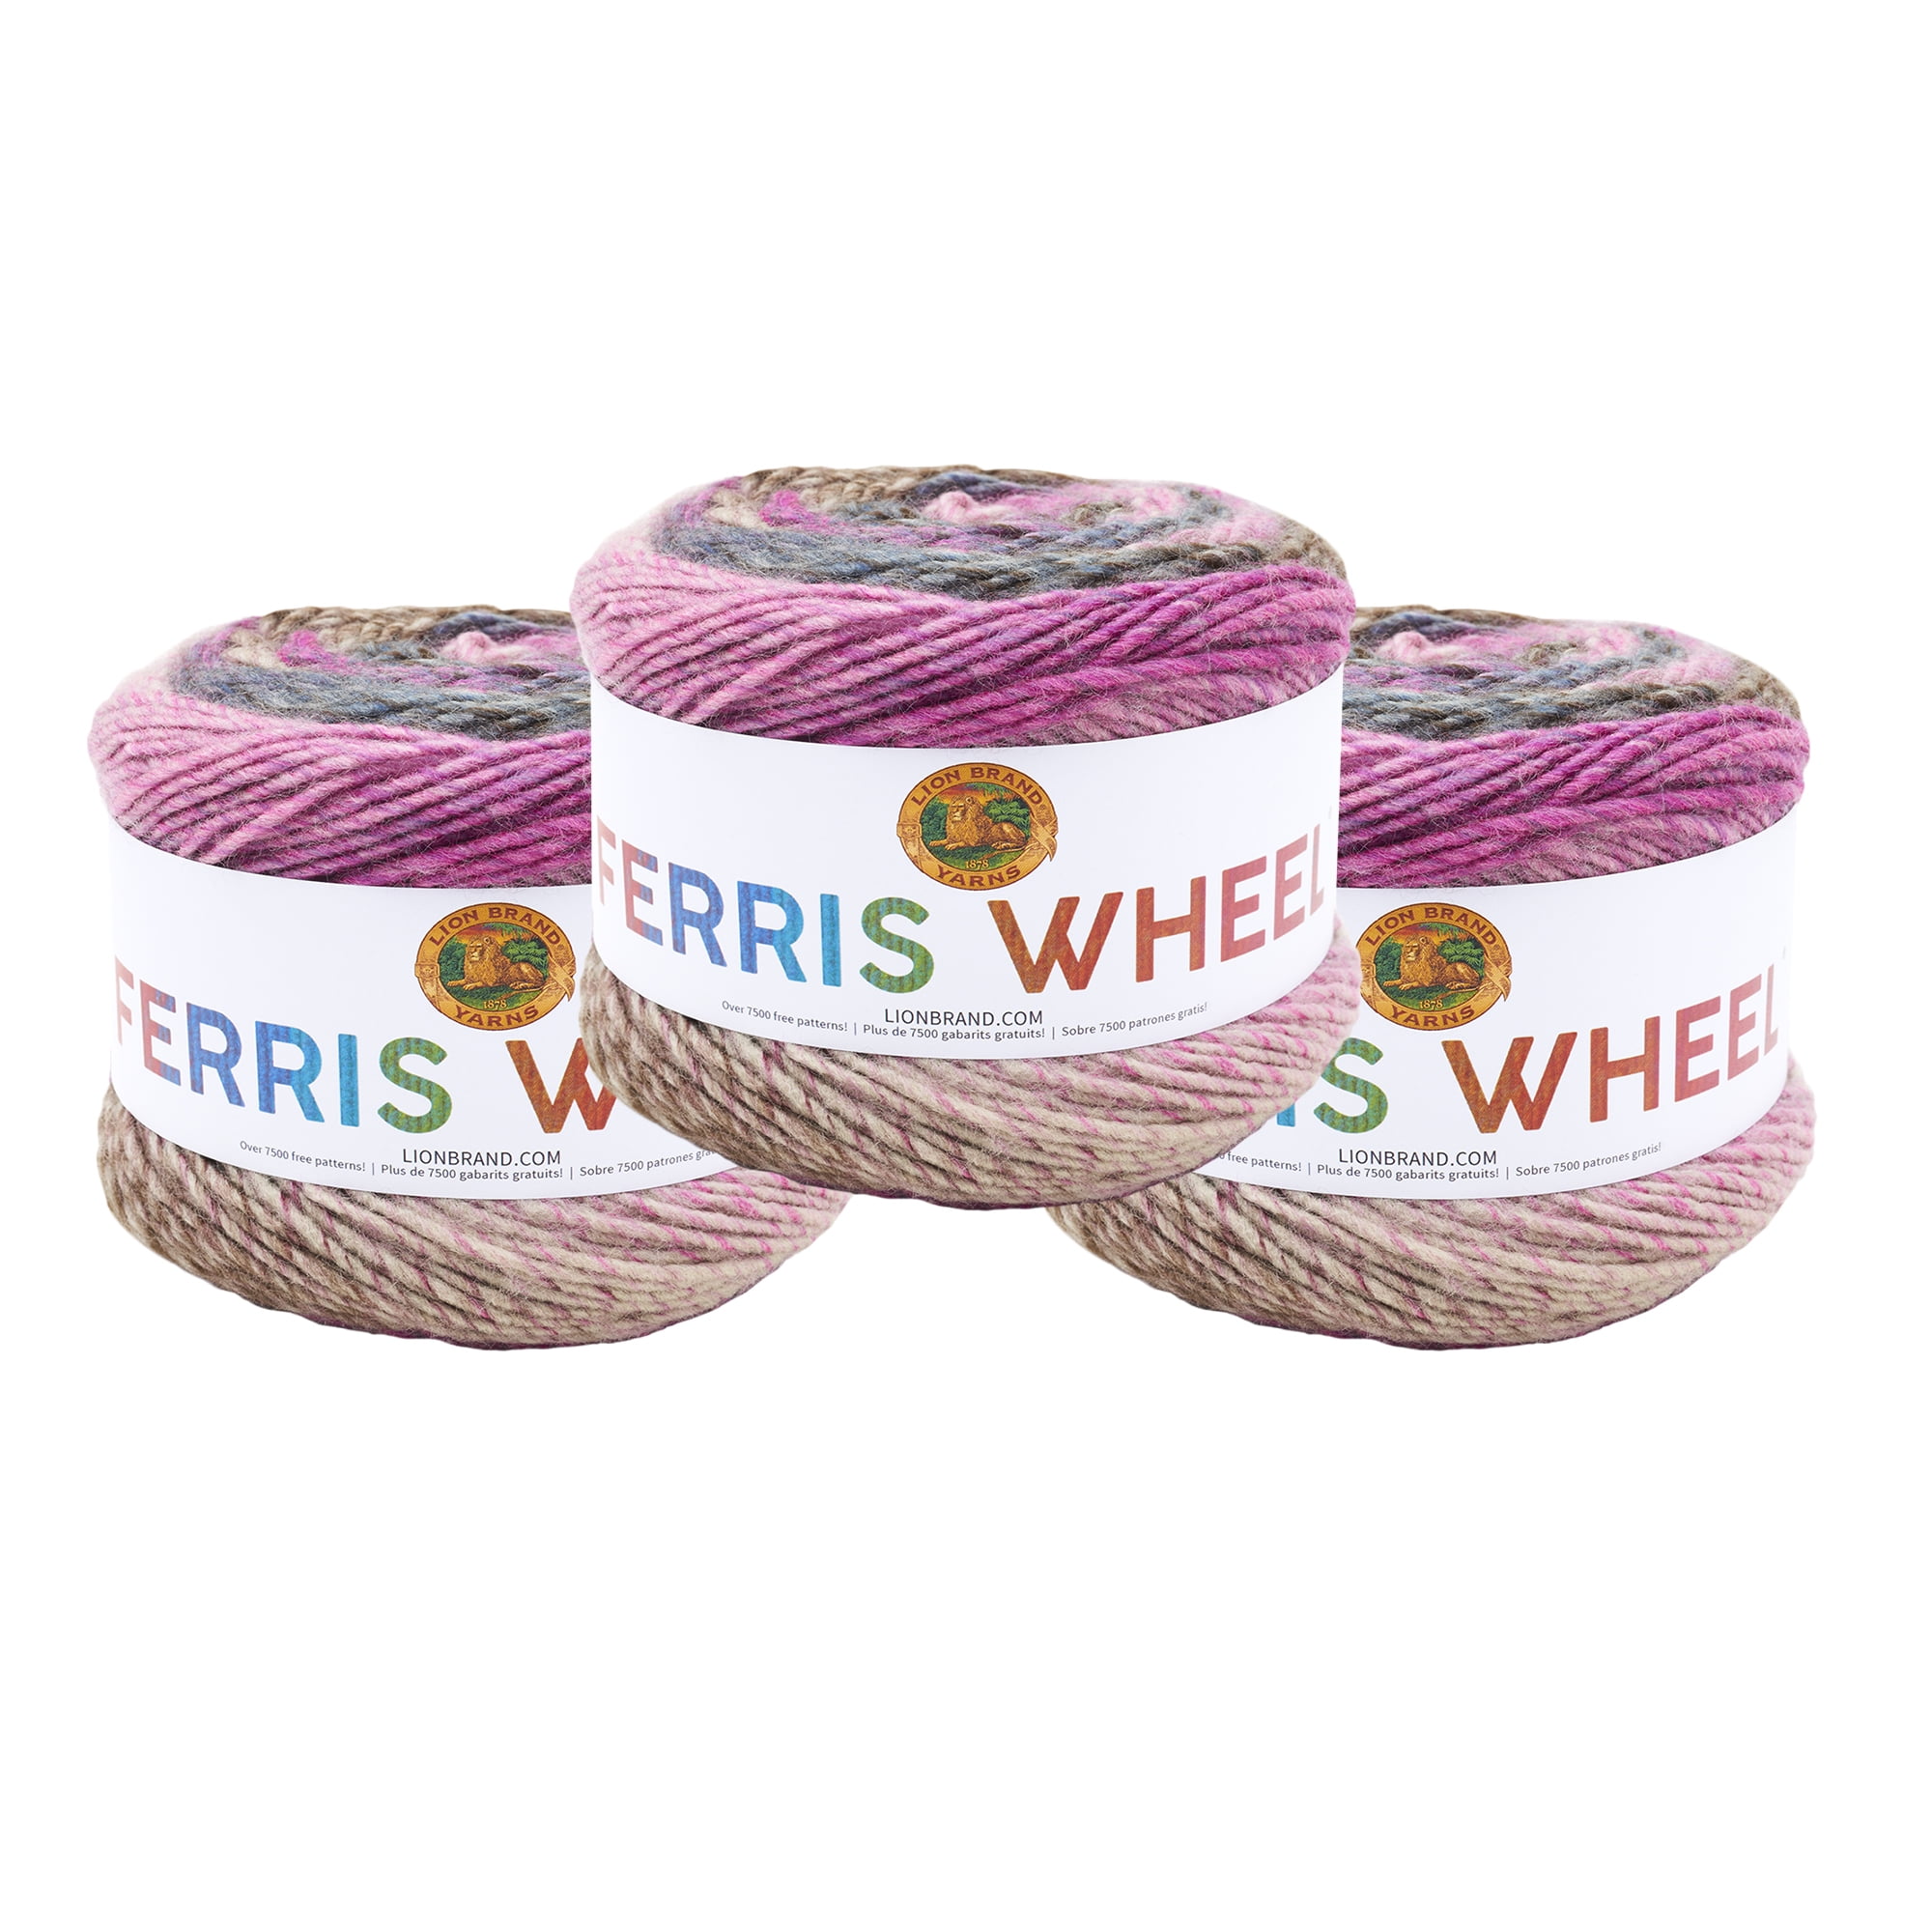 Lion Brand Yarn Ferris Wheel Yarn, Multicolor Yarn for Knitting,  Crocheting, and Crafts, 3-Pack, Sprinkles